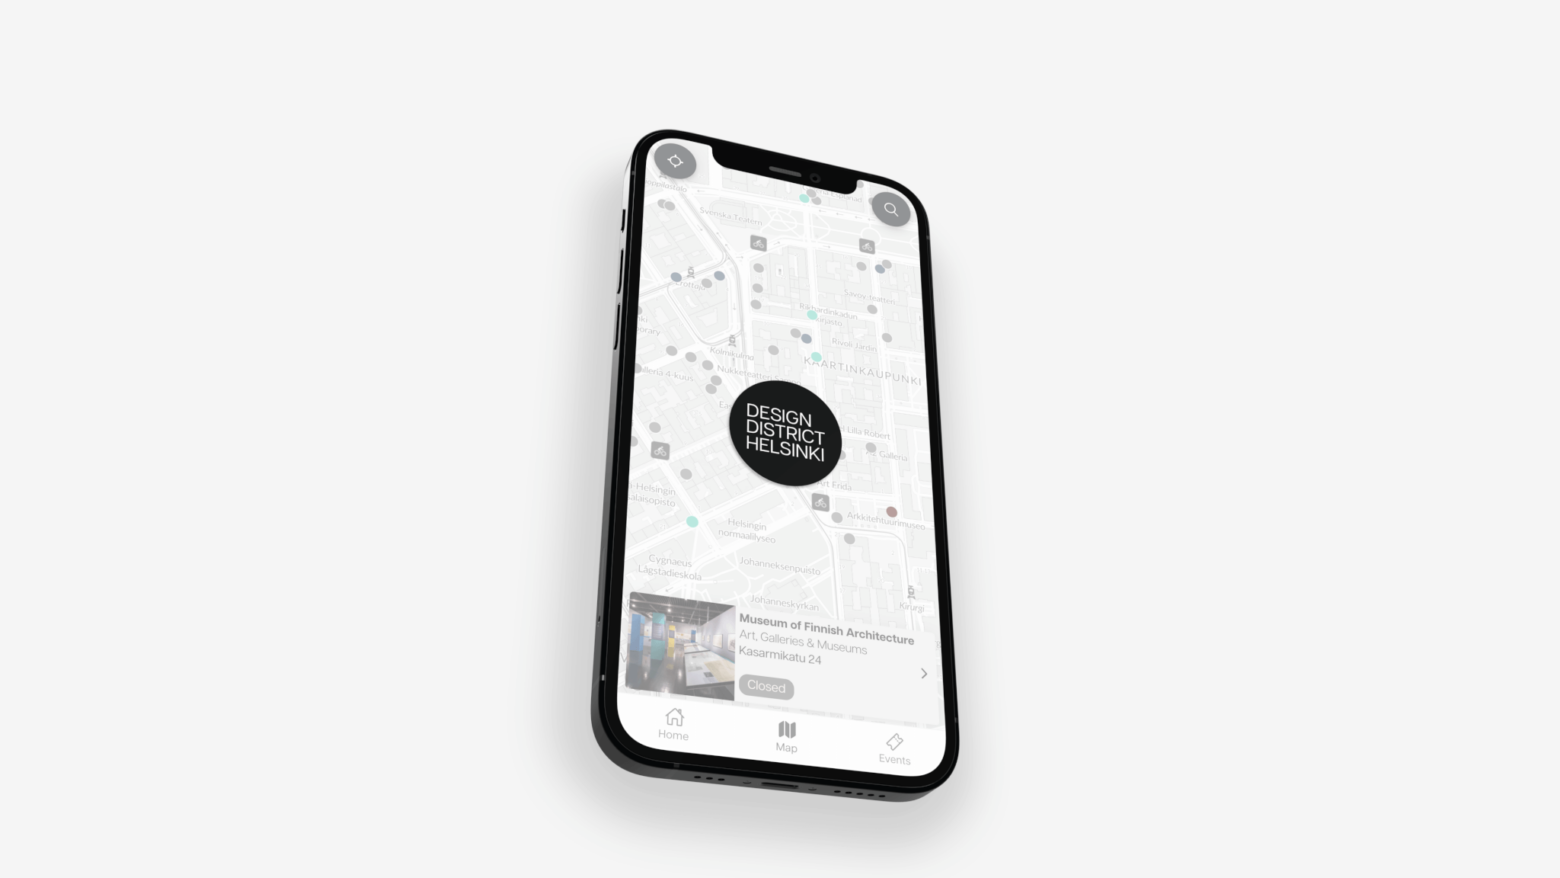 Screenshot of the Design District Helsinki mobile application